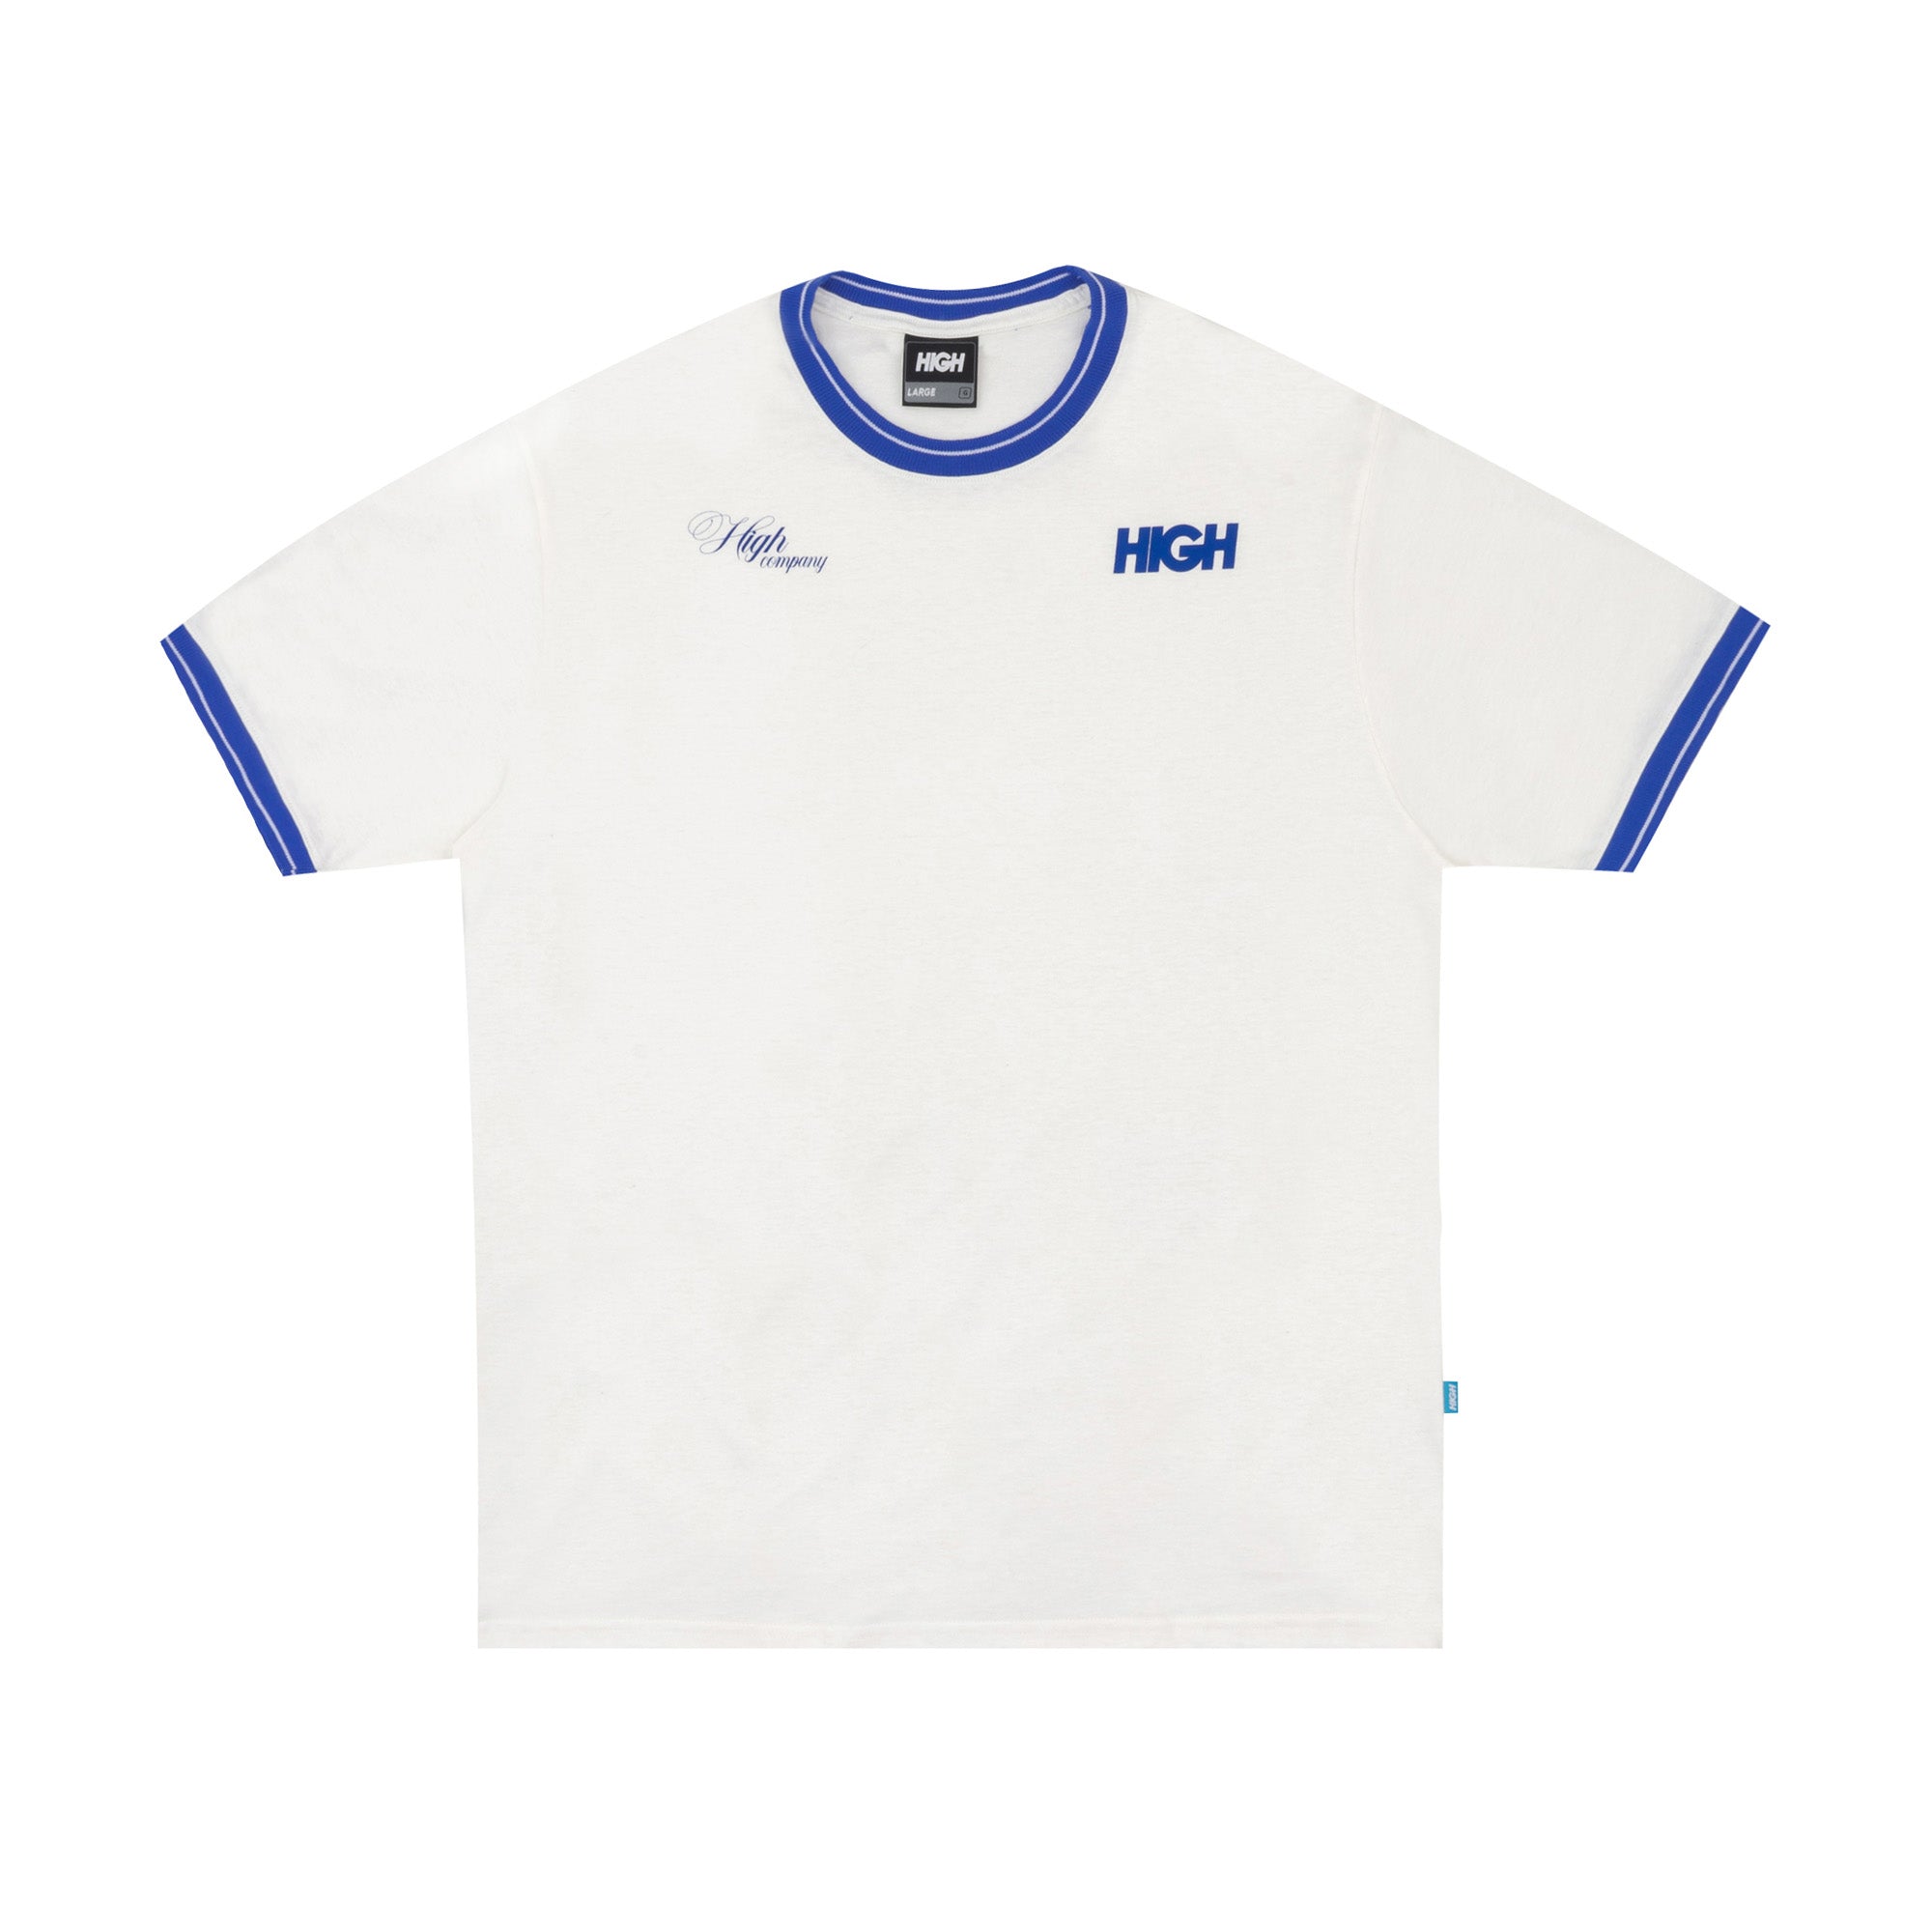 HIGH - Camiseta Classy White/ Blue